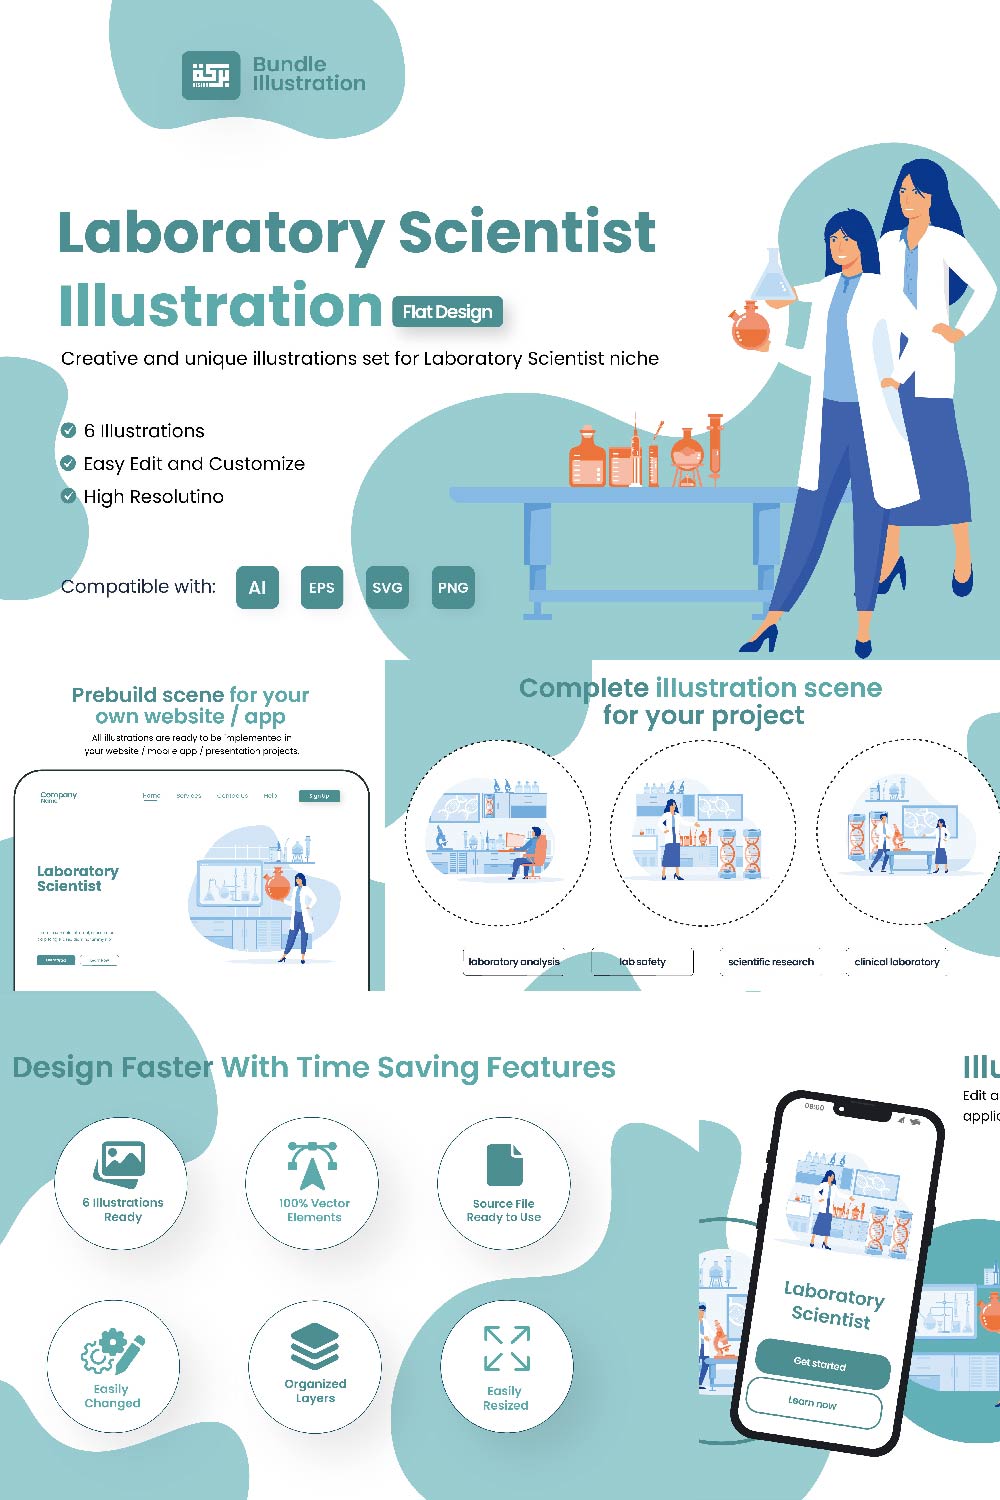 Laboratory Scientist Illustration Design pinterest preview image.